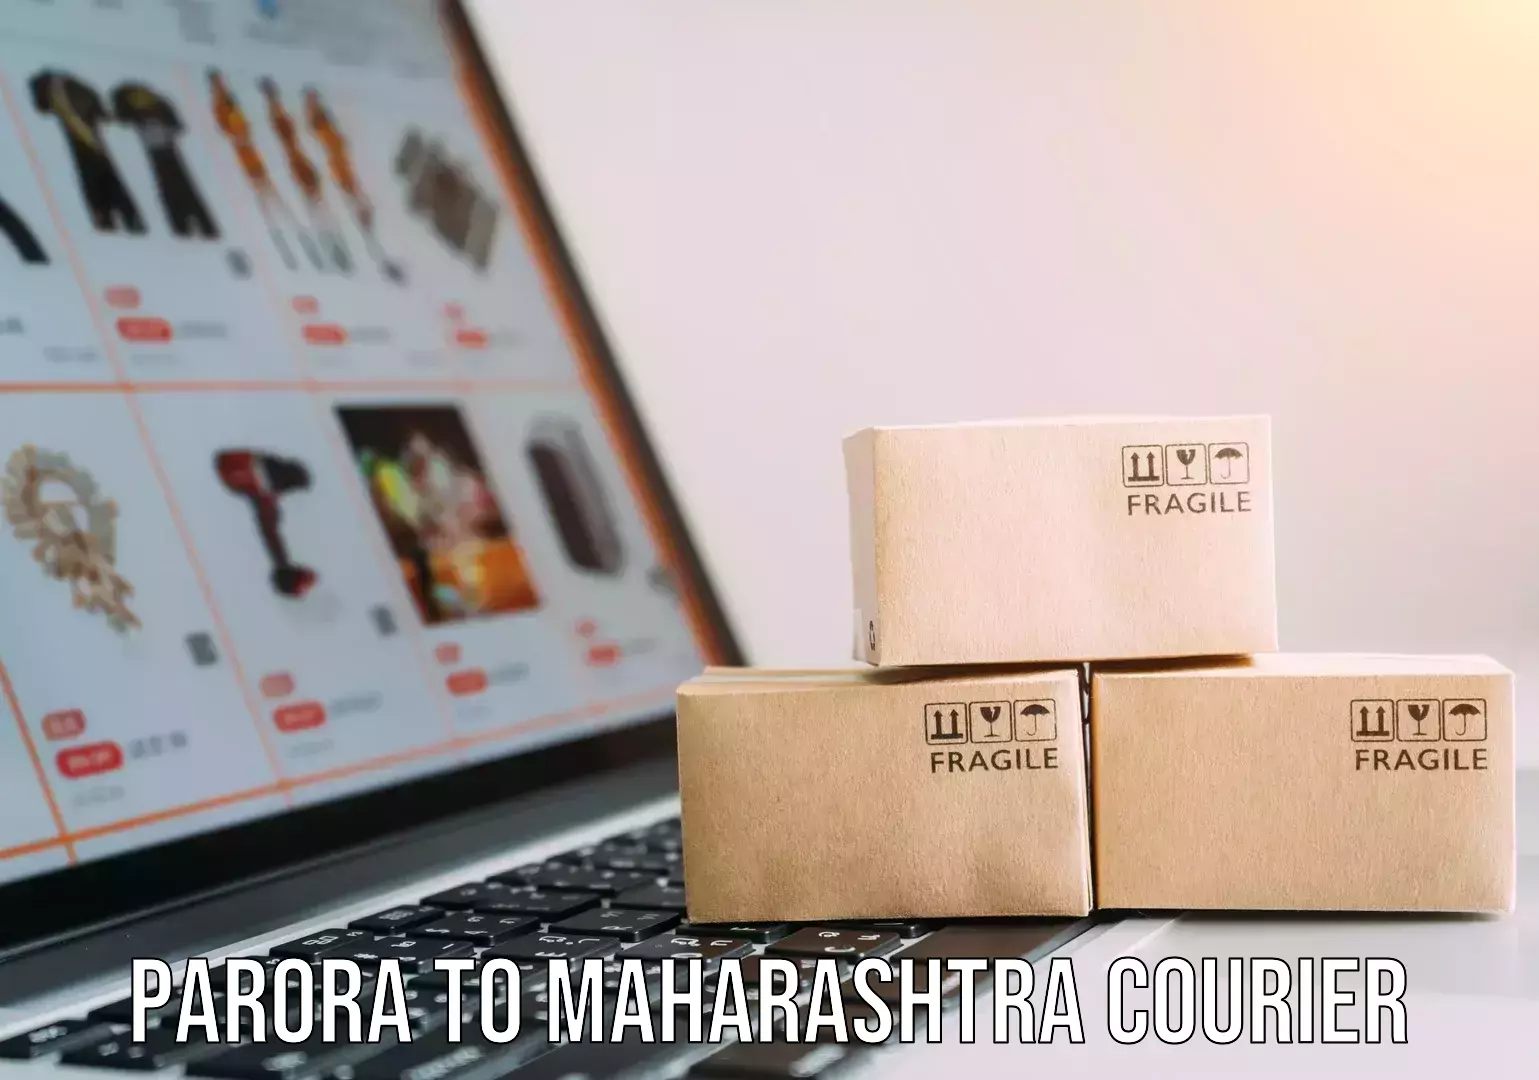 Moving service excellence Parora to Maharashtra